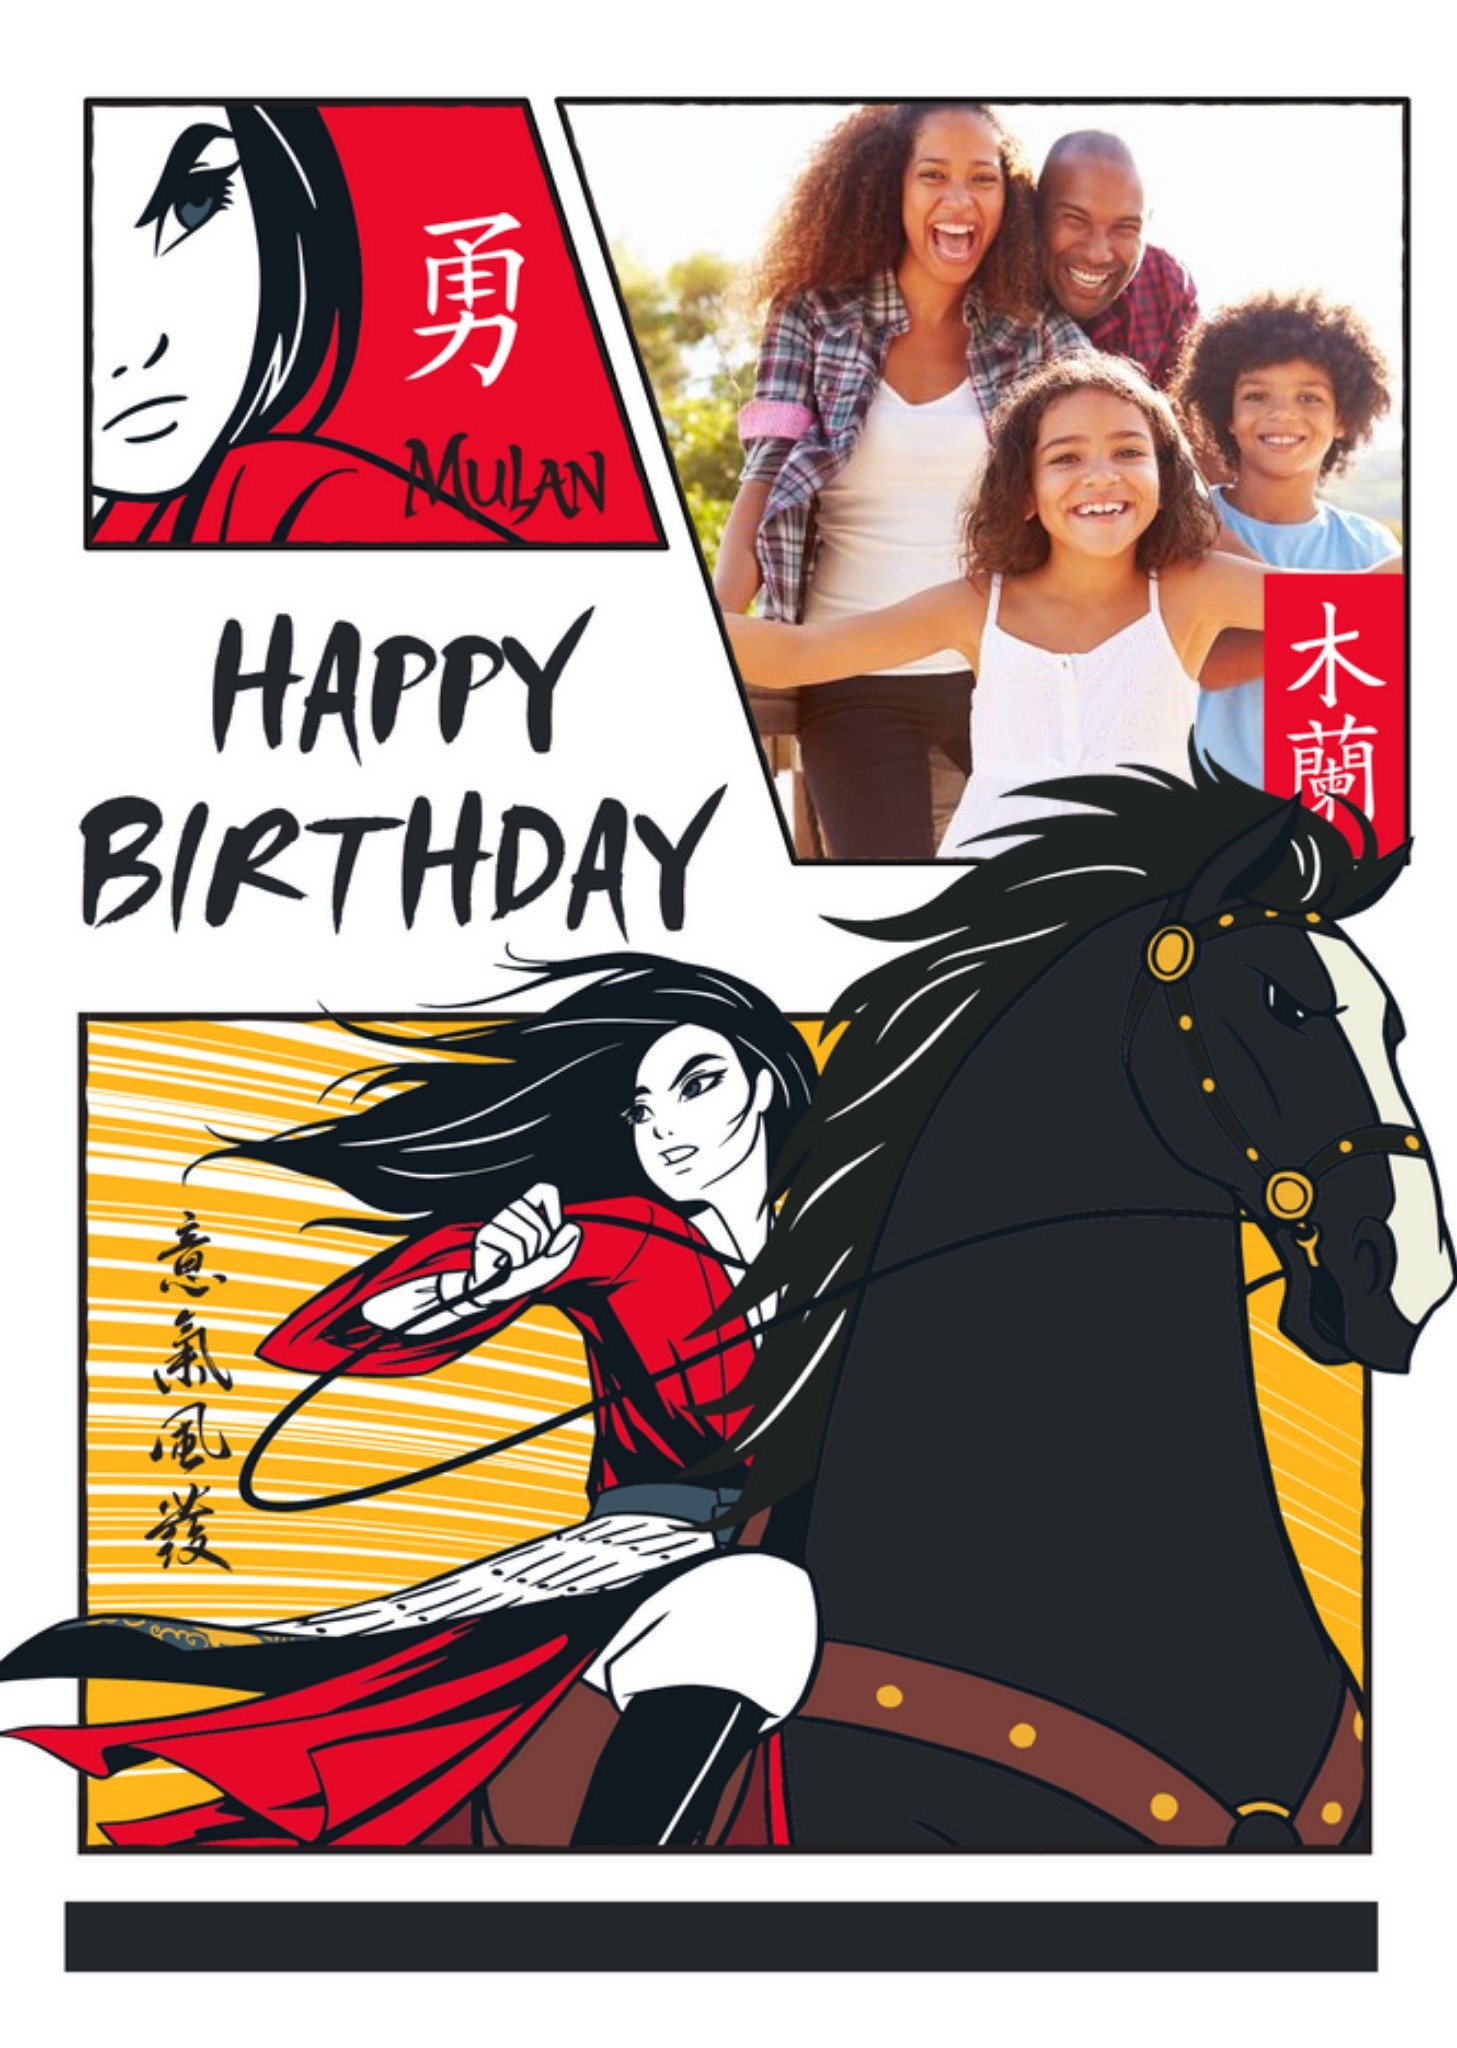 Disney Mulan Photo Upload Birthday Card Ecard